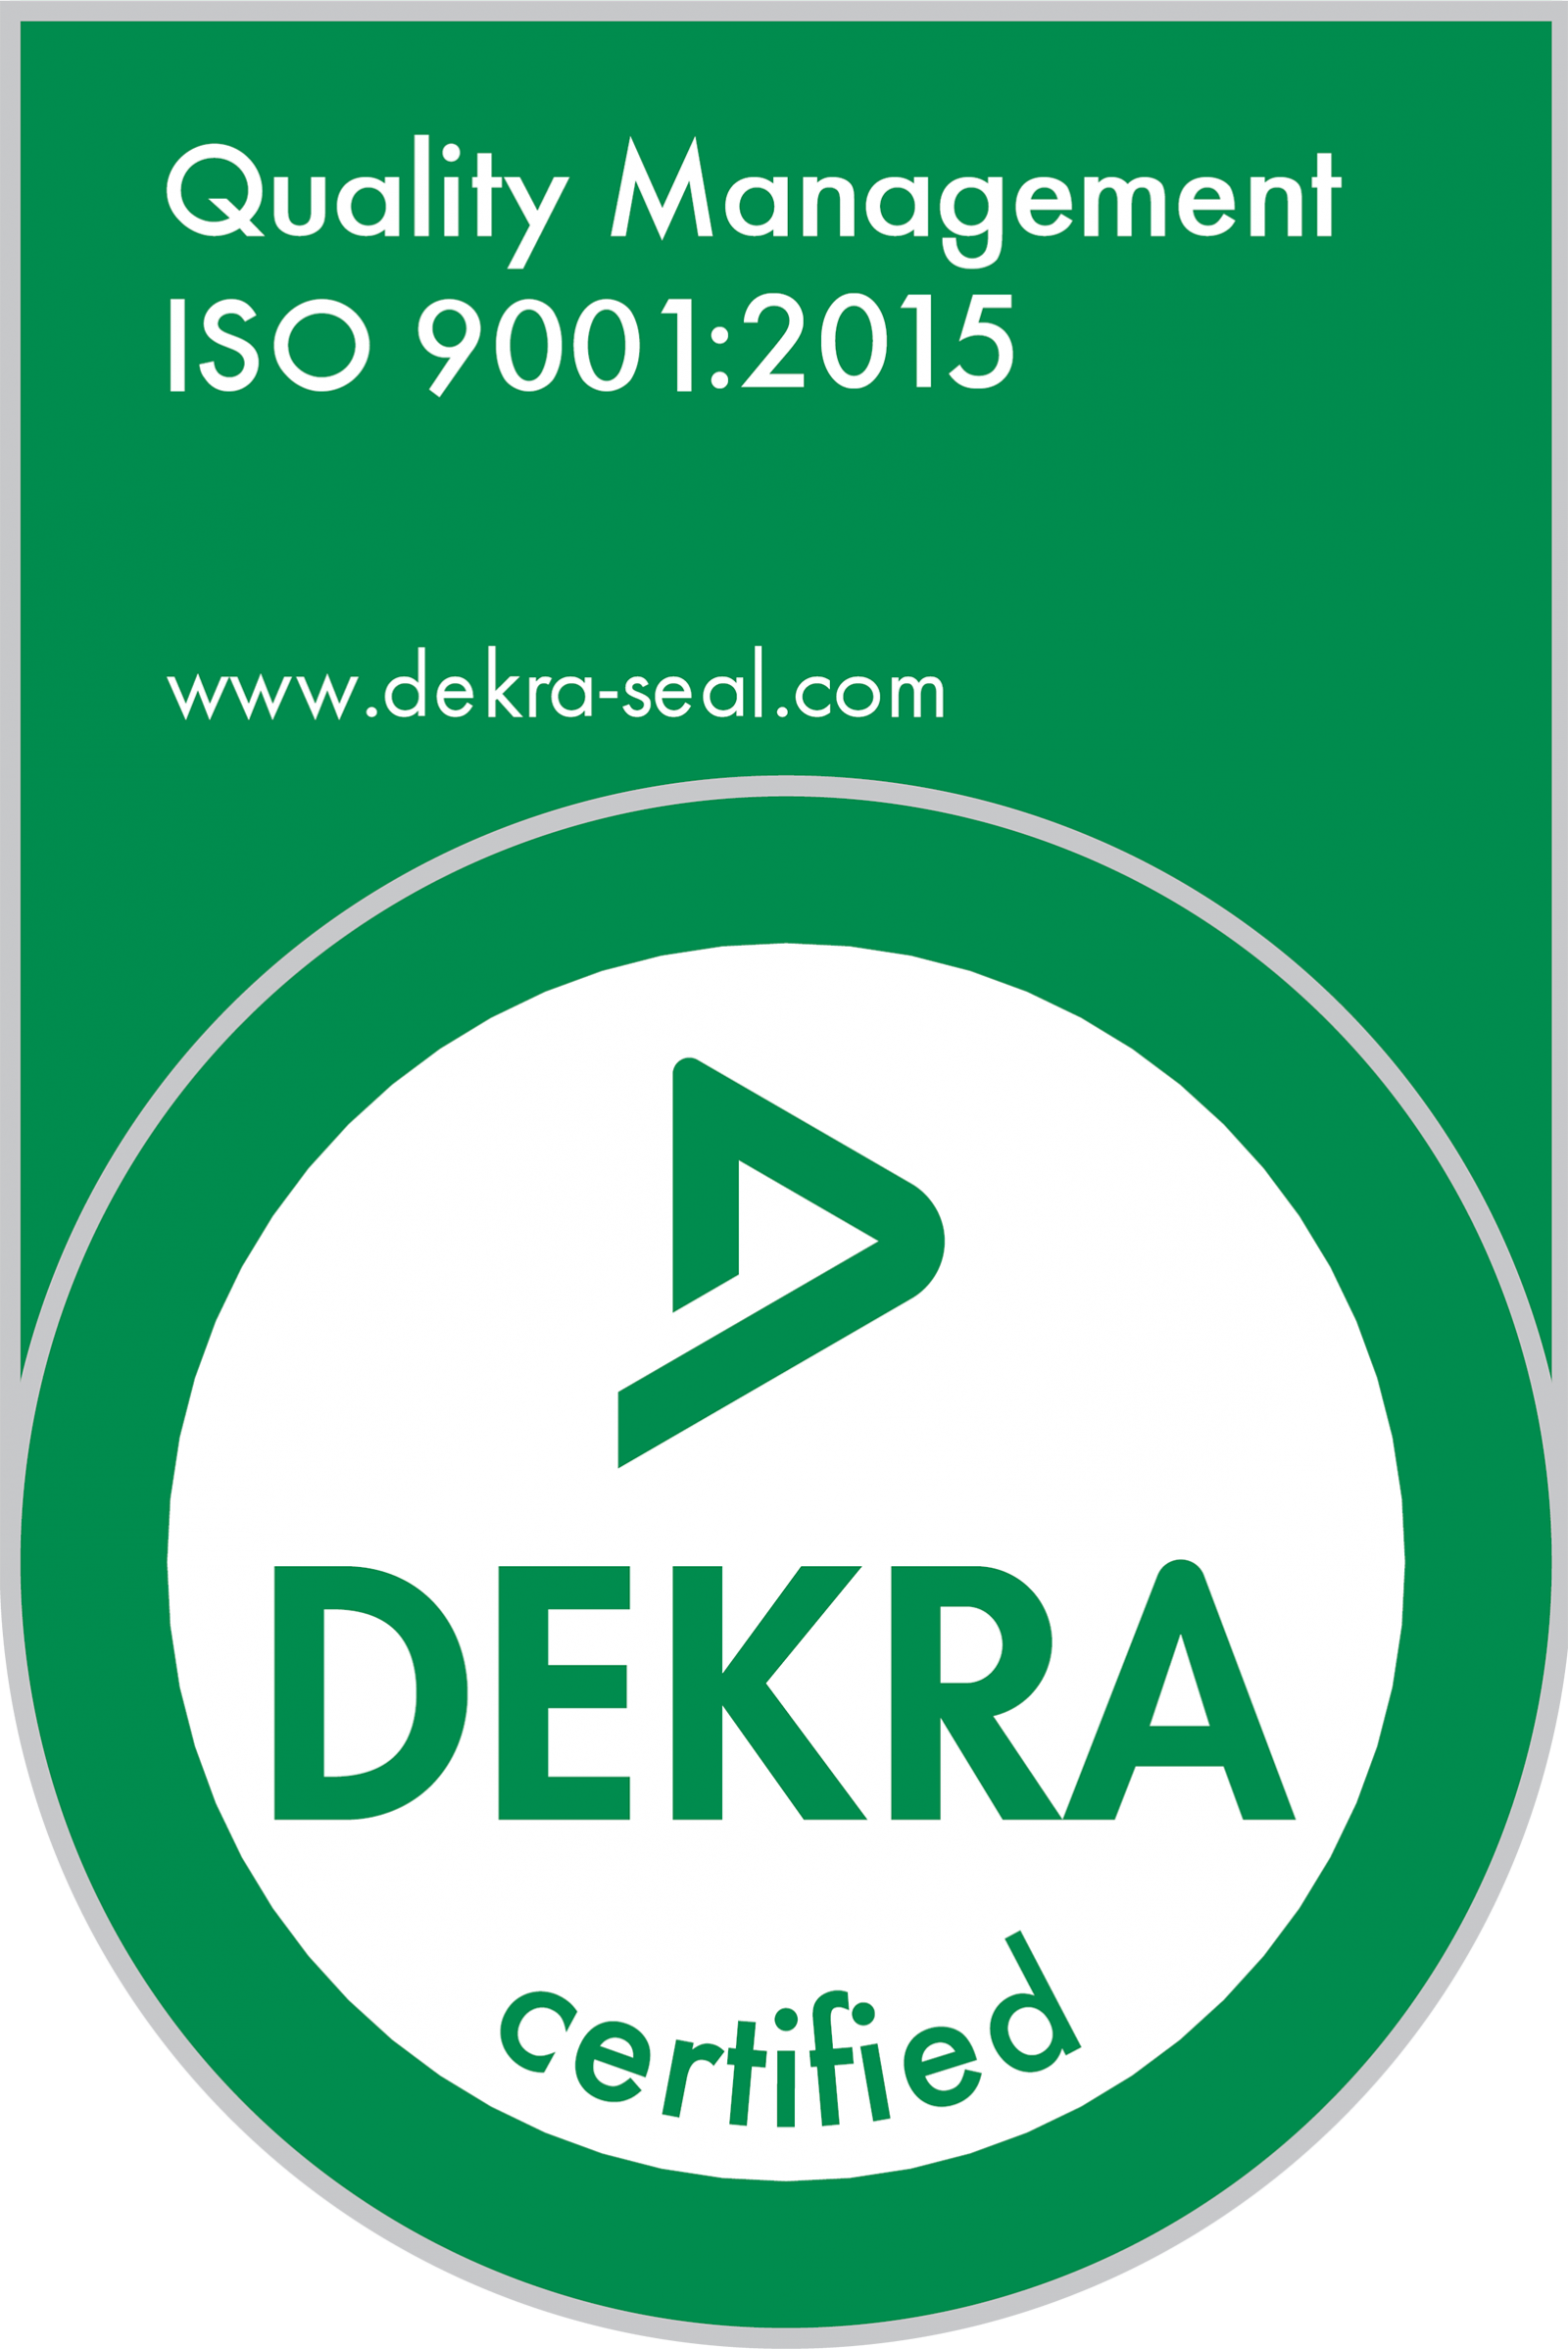 Dekra Certified ISO 9001:2015